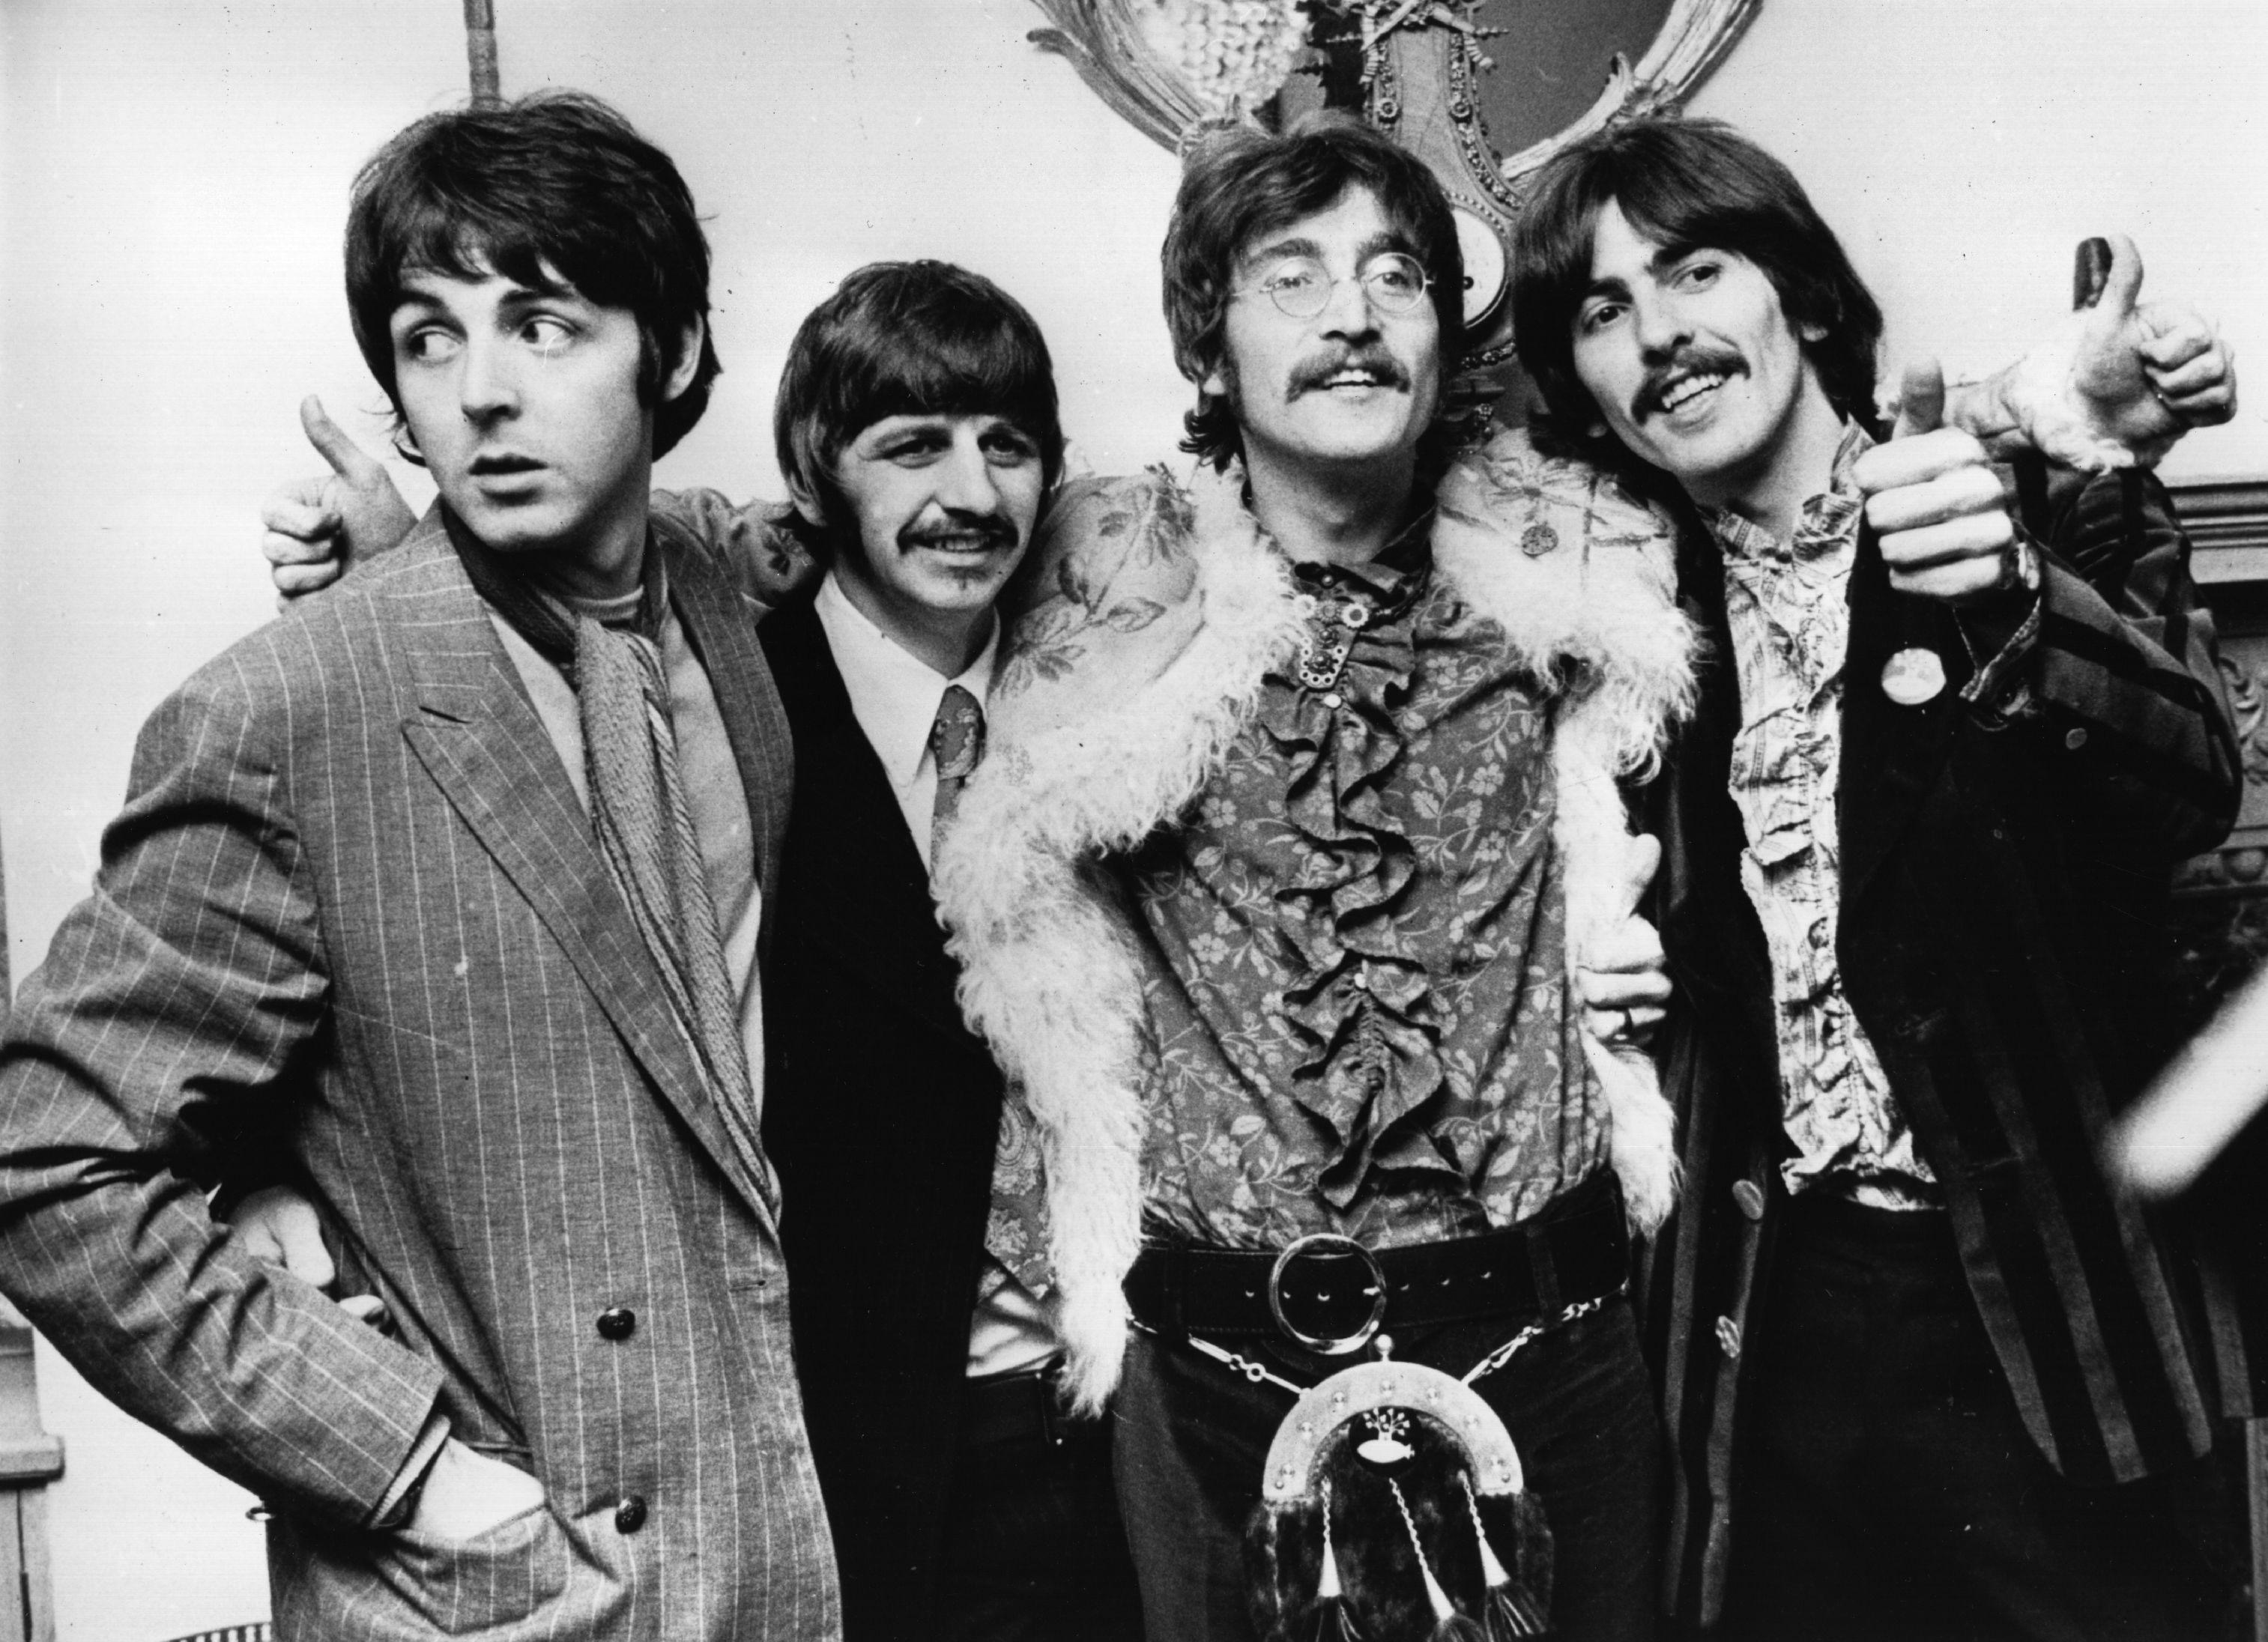 Paul McCartney, Ringo Starr, John Lennon and George Harrison of The Beatles